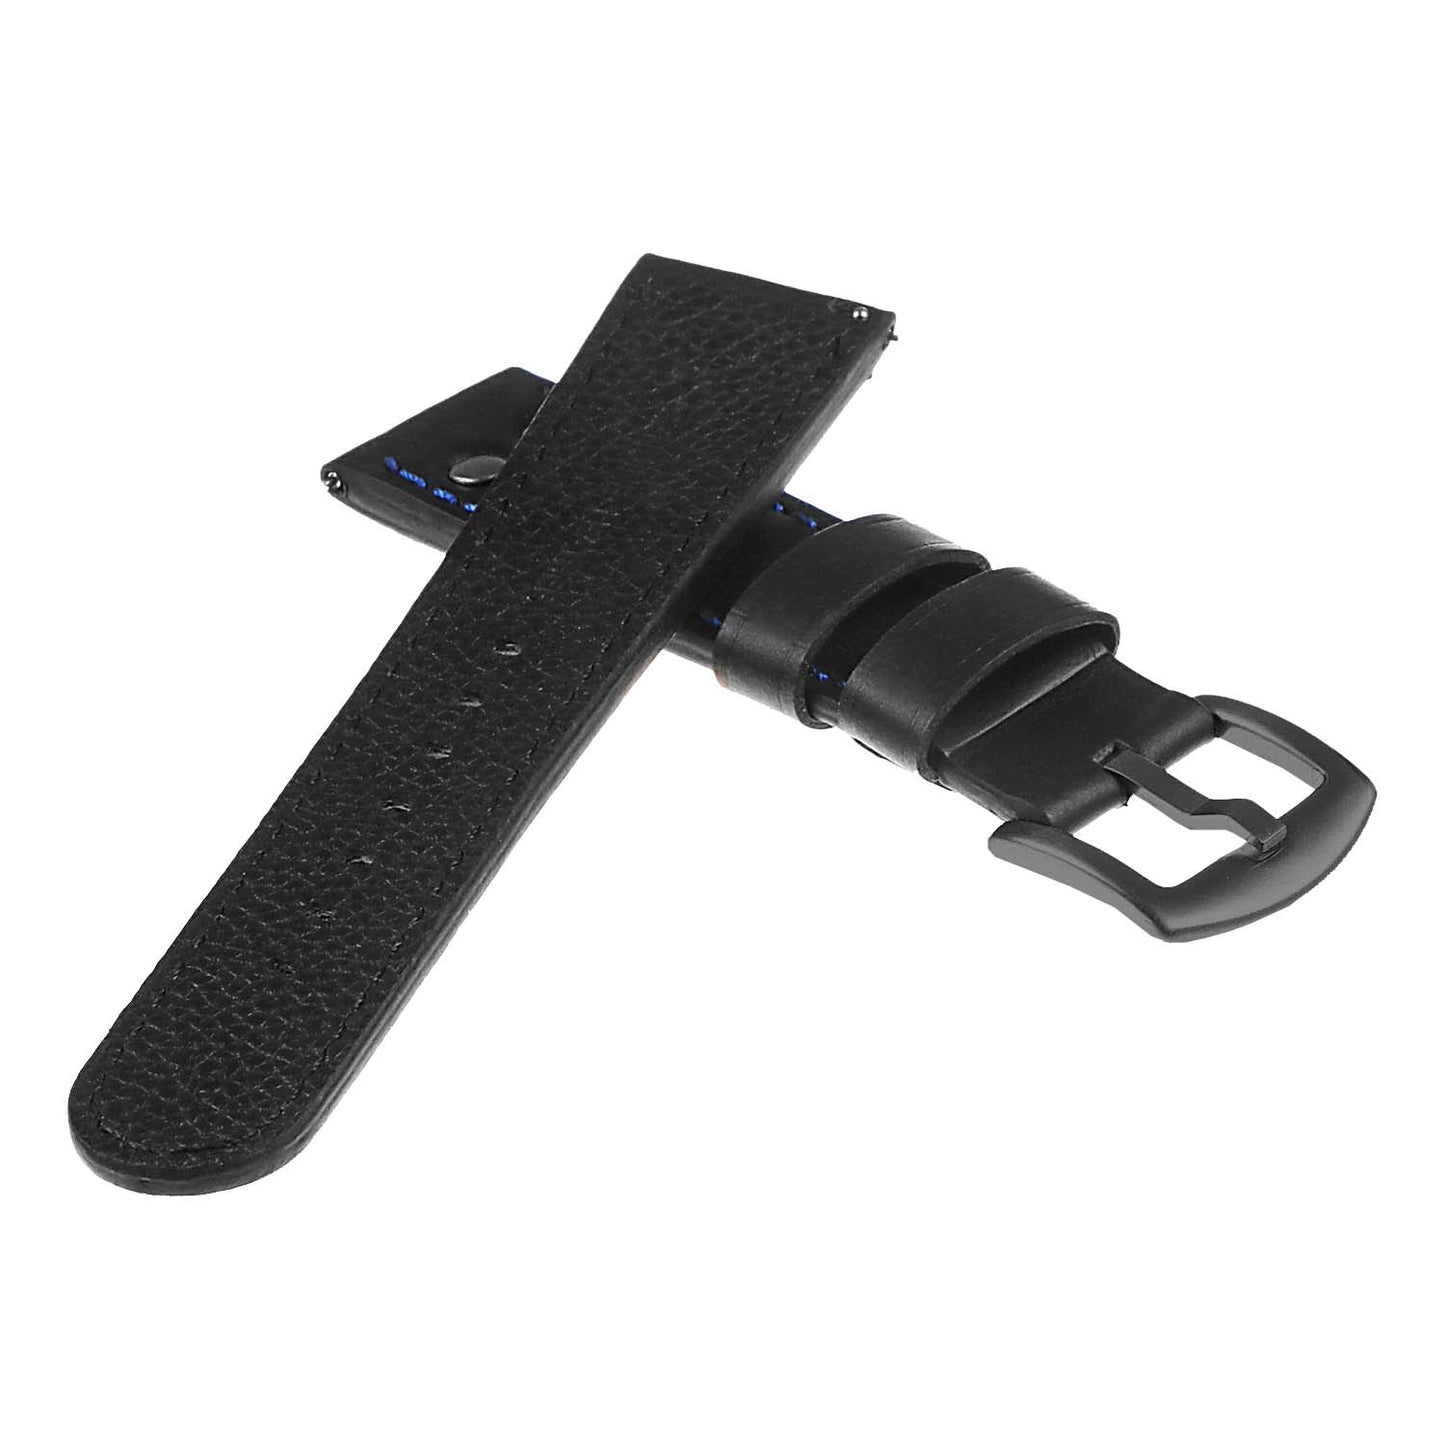 DASSARI Pilot Leather Watch Band for Samsung Gear Sport